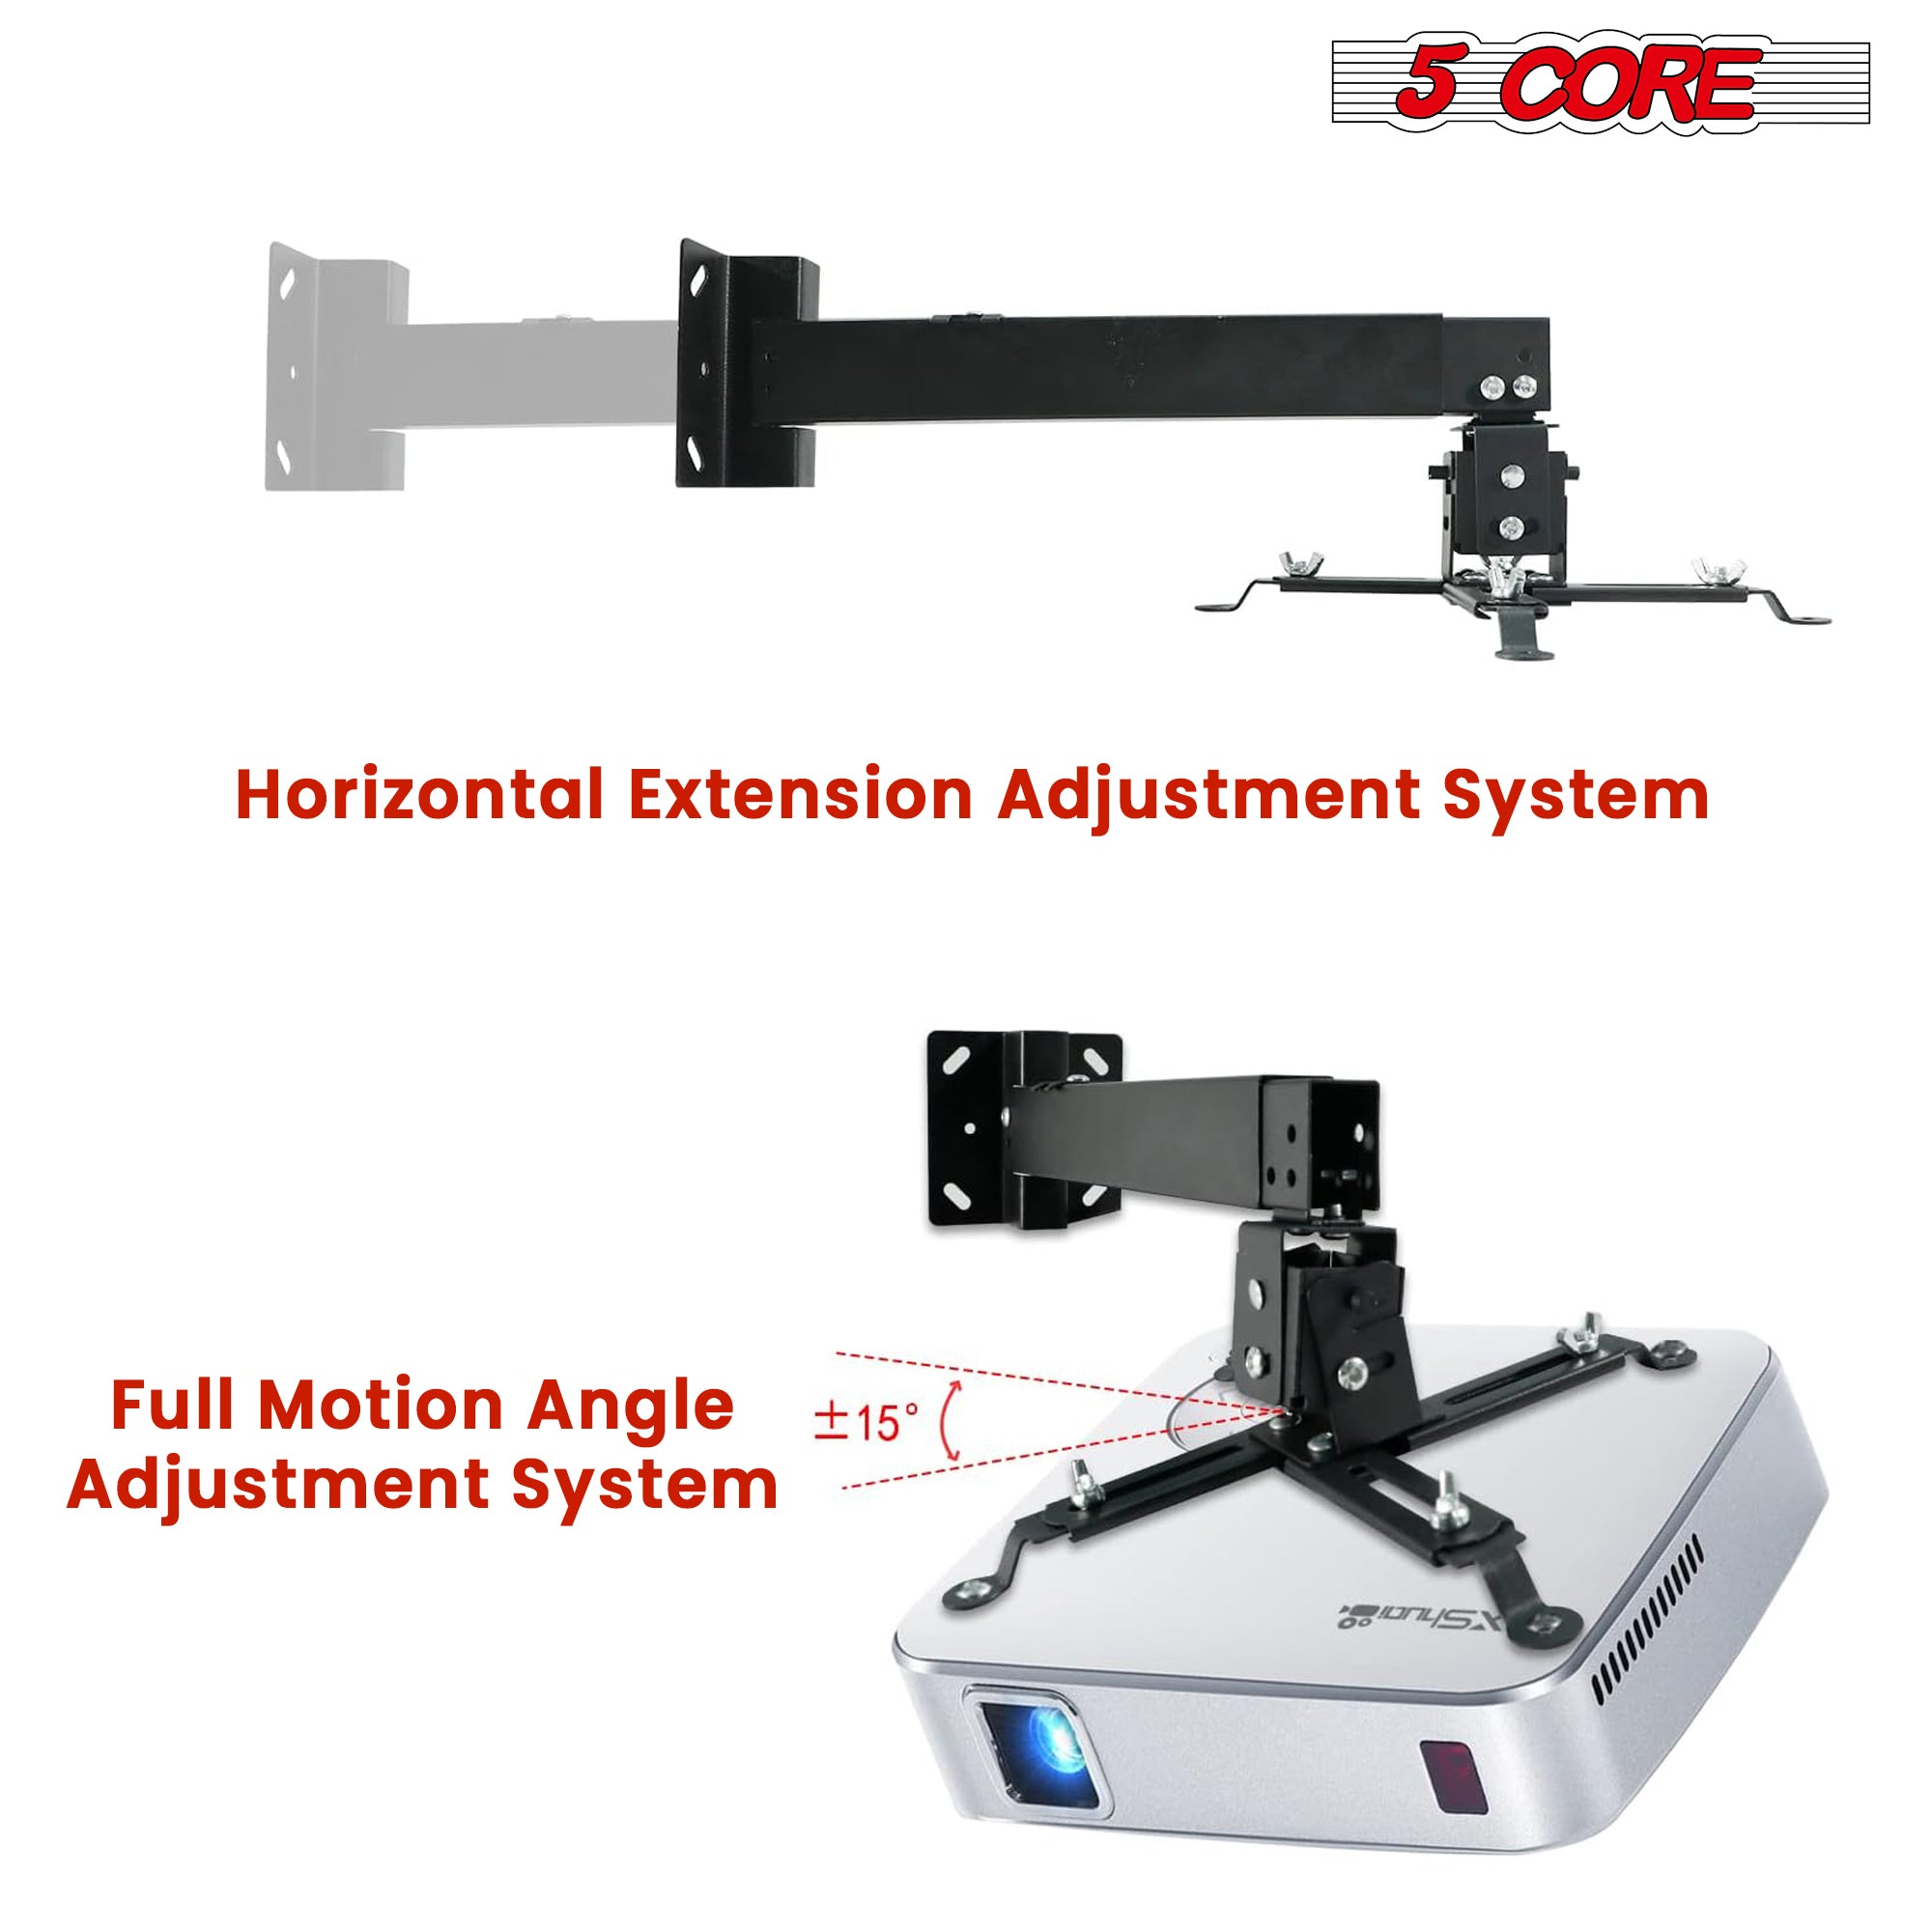 Horizontal extension adjustment system